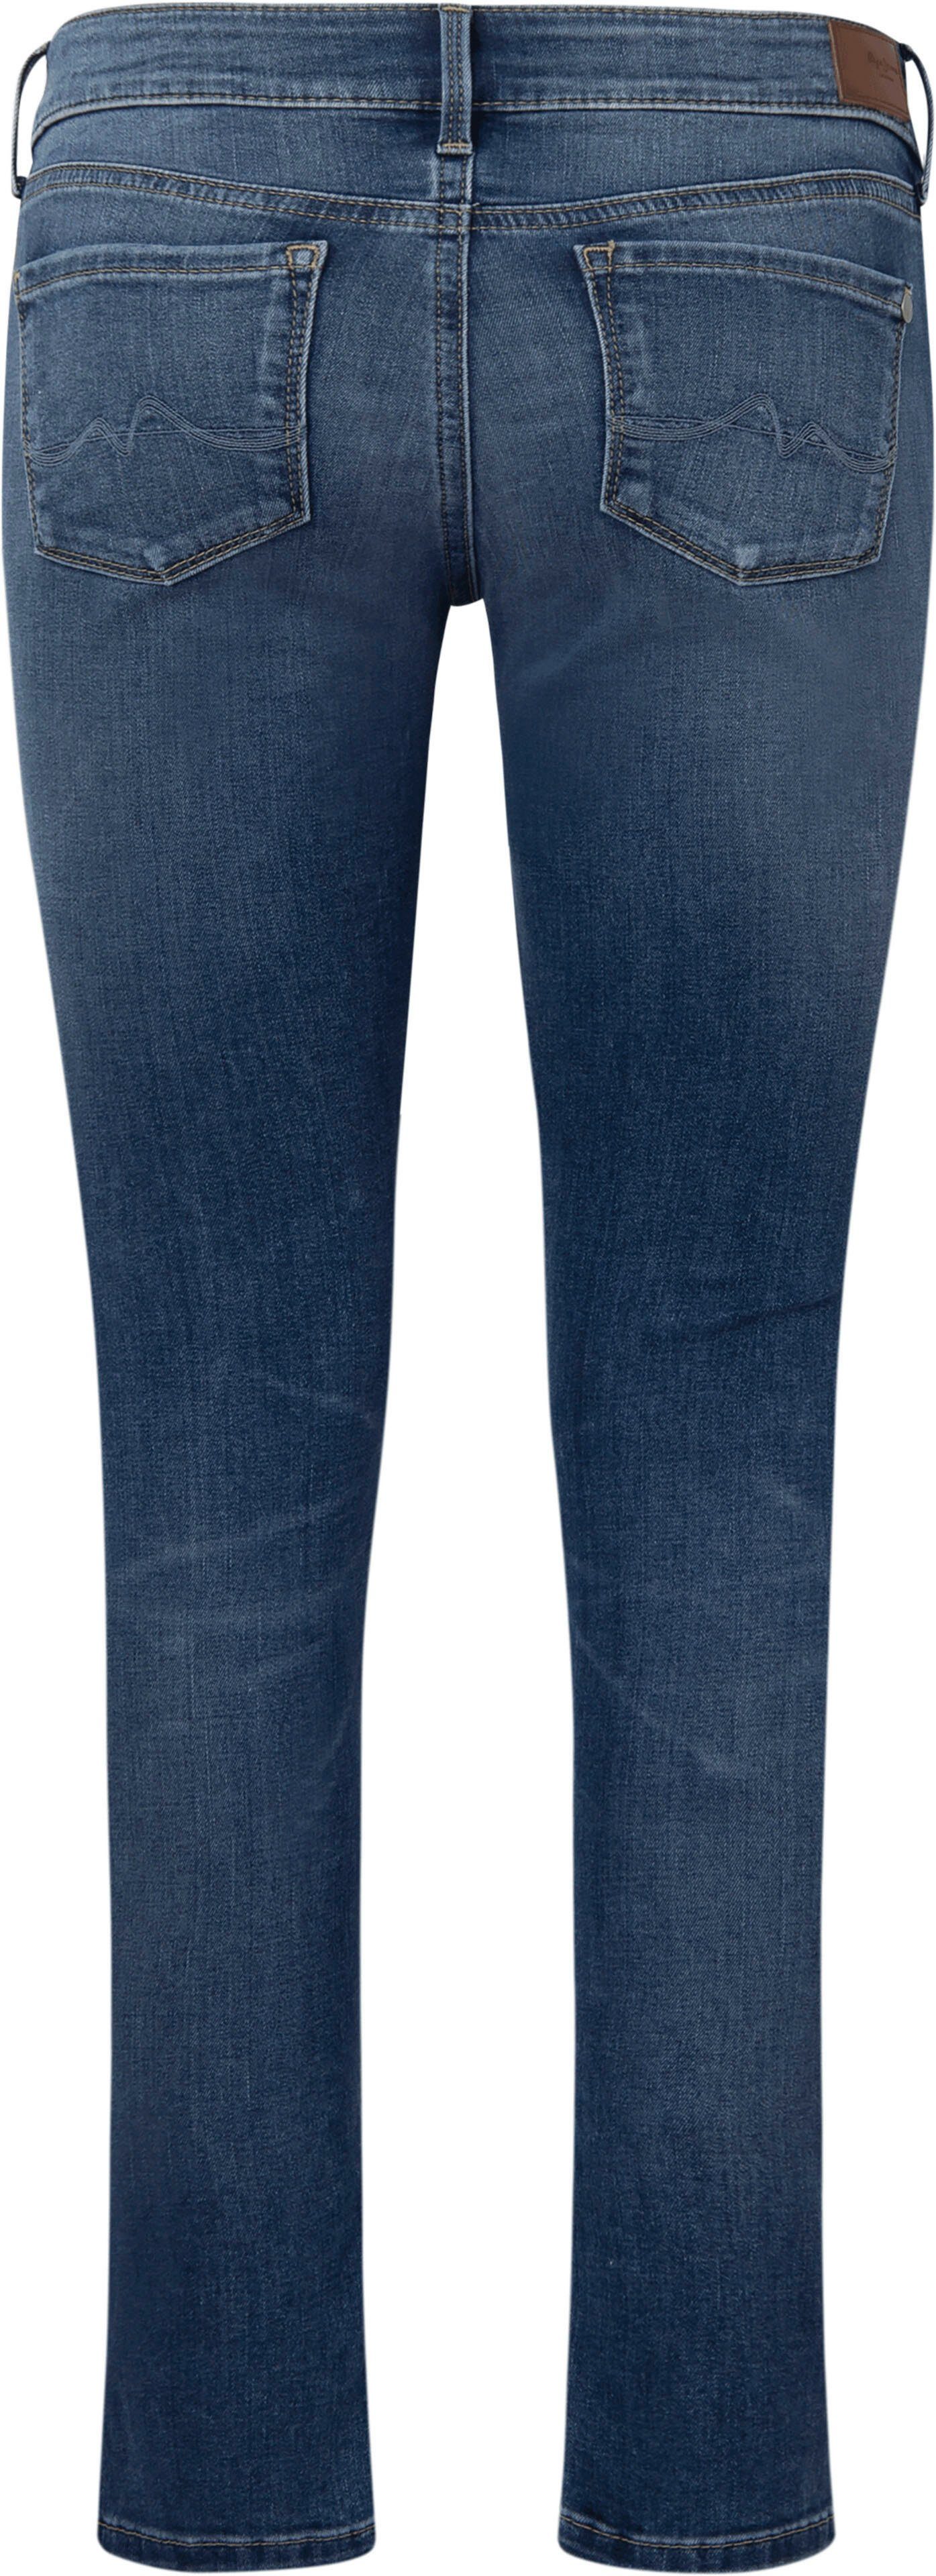 Jeans mit und Skinny-fit-Jeans SOHO Bund blue im 1-Knopf 5-Pocket-Stil Stretch-Anteil Pepe